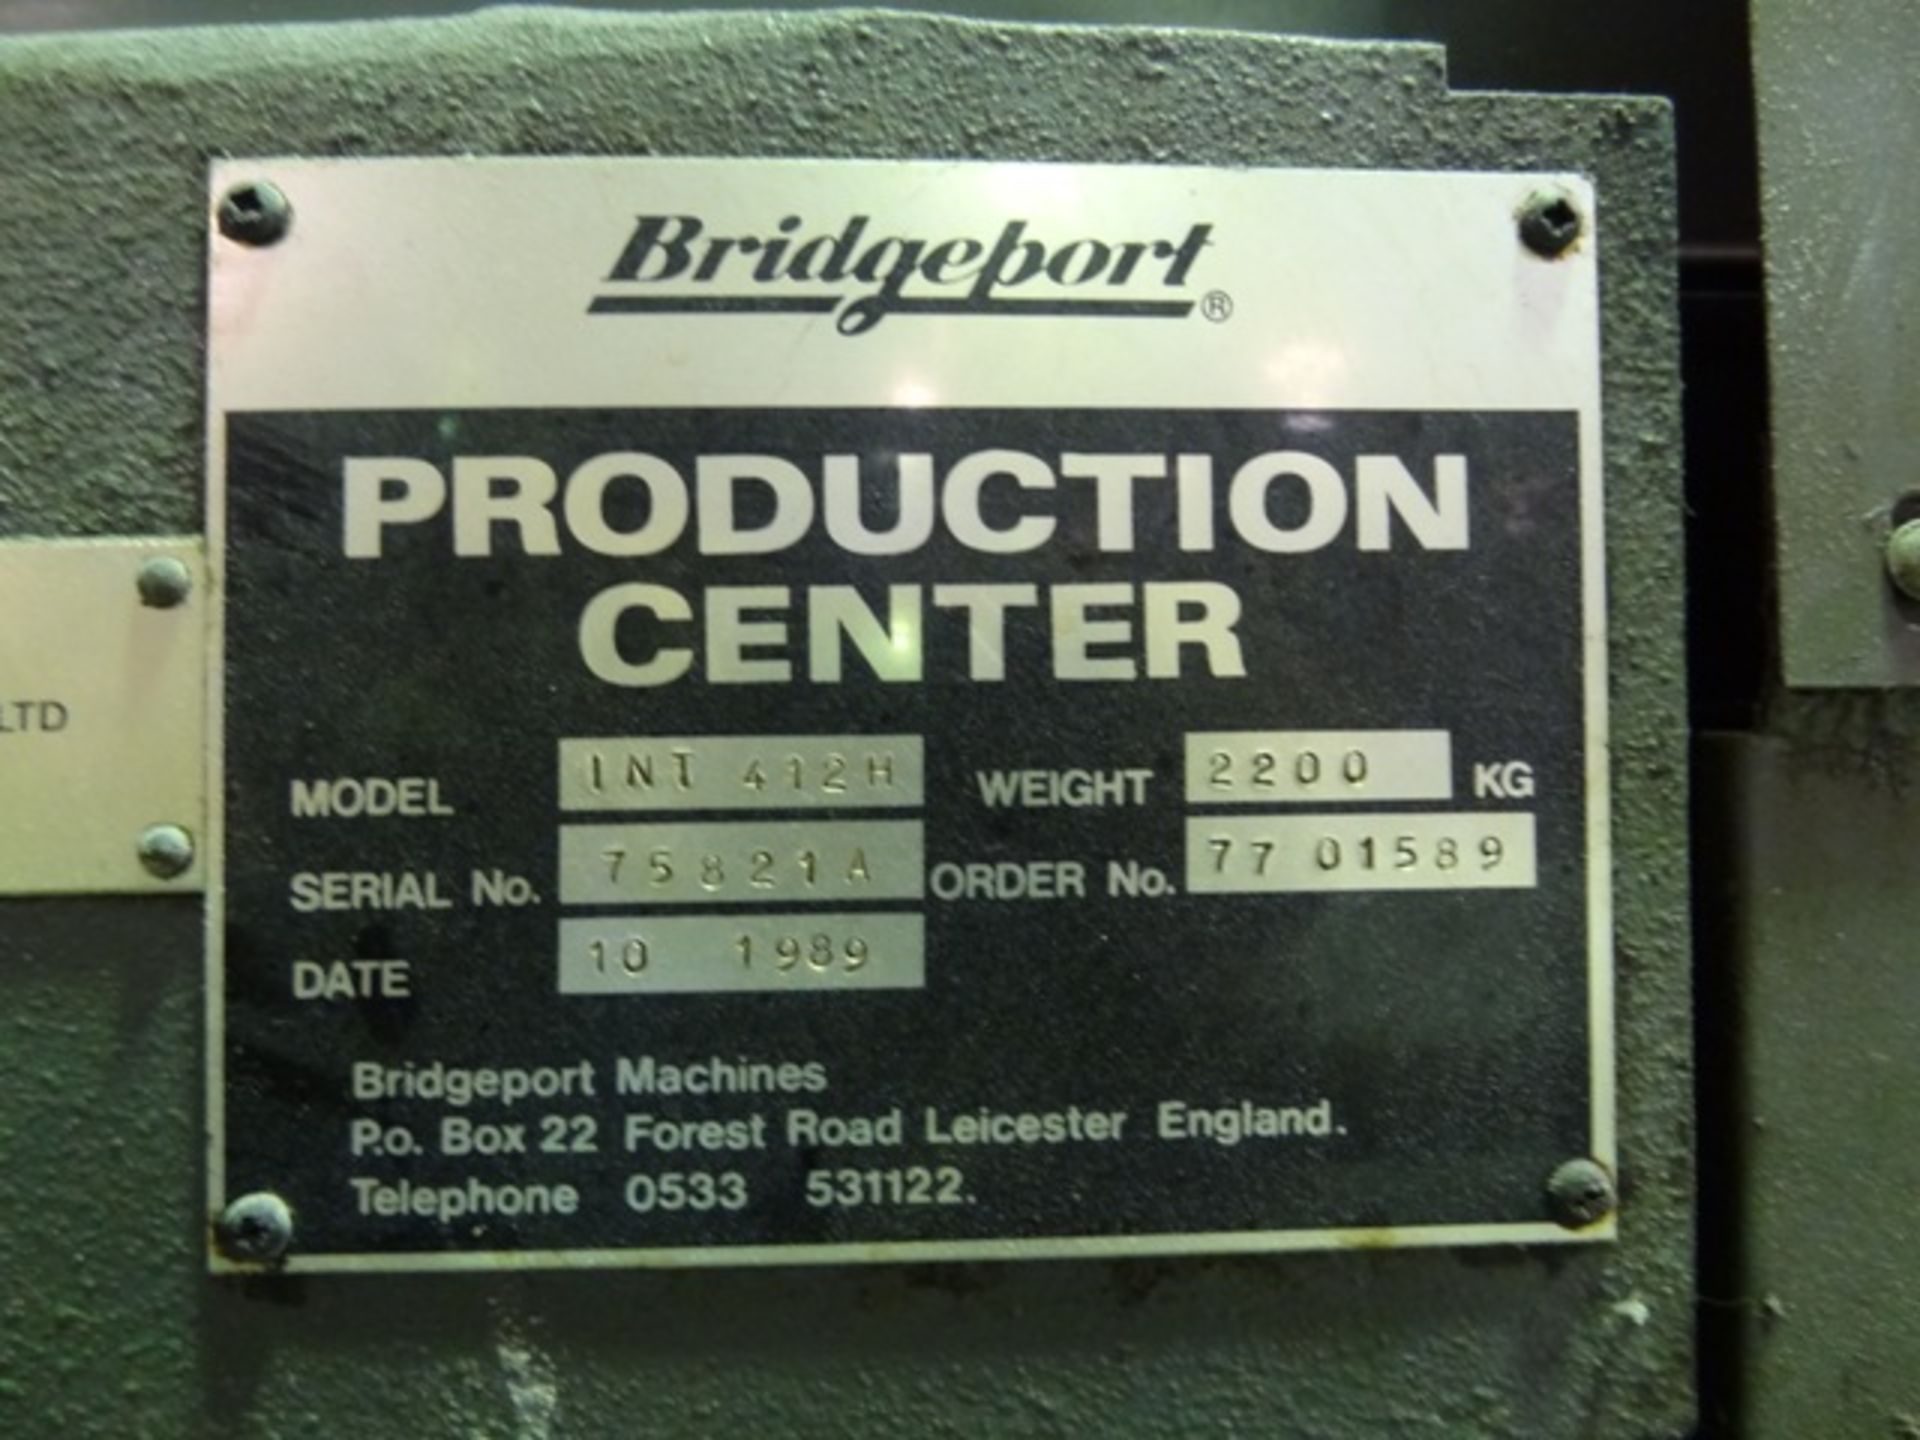 BRIDGEPORT INTERACT 412H VERTICAL MACHINING CENTER, SN 75821A, YEAR 1989, LOCATION MI - Image 5 of 5